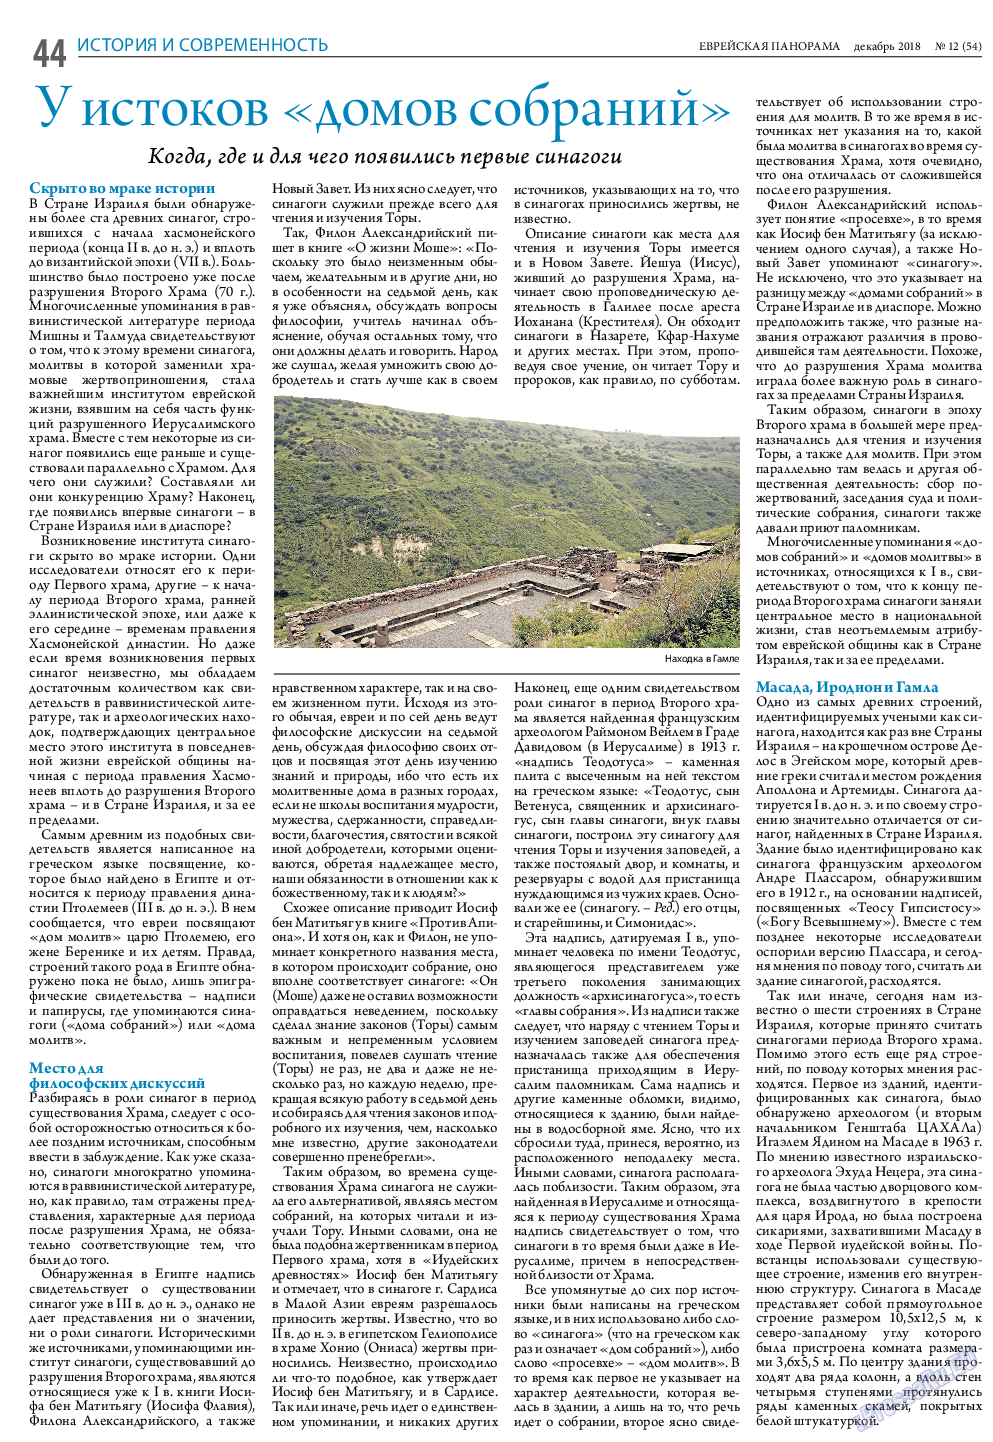 Еврейская панорама, газета. 2018 №12 стр.44